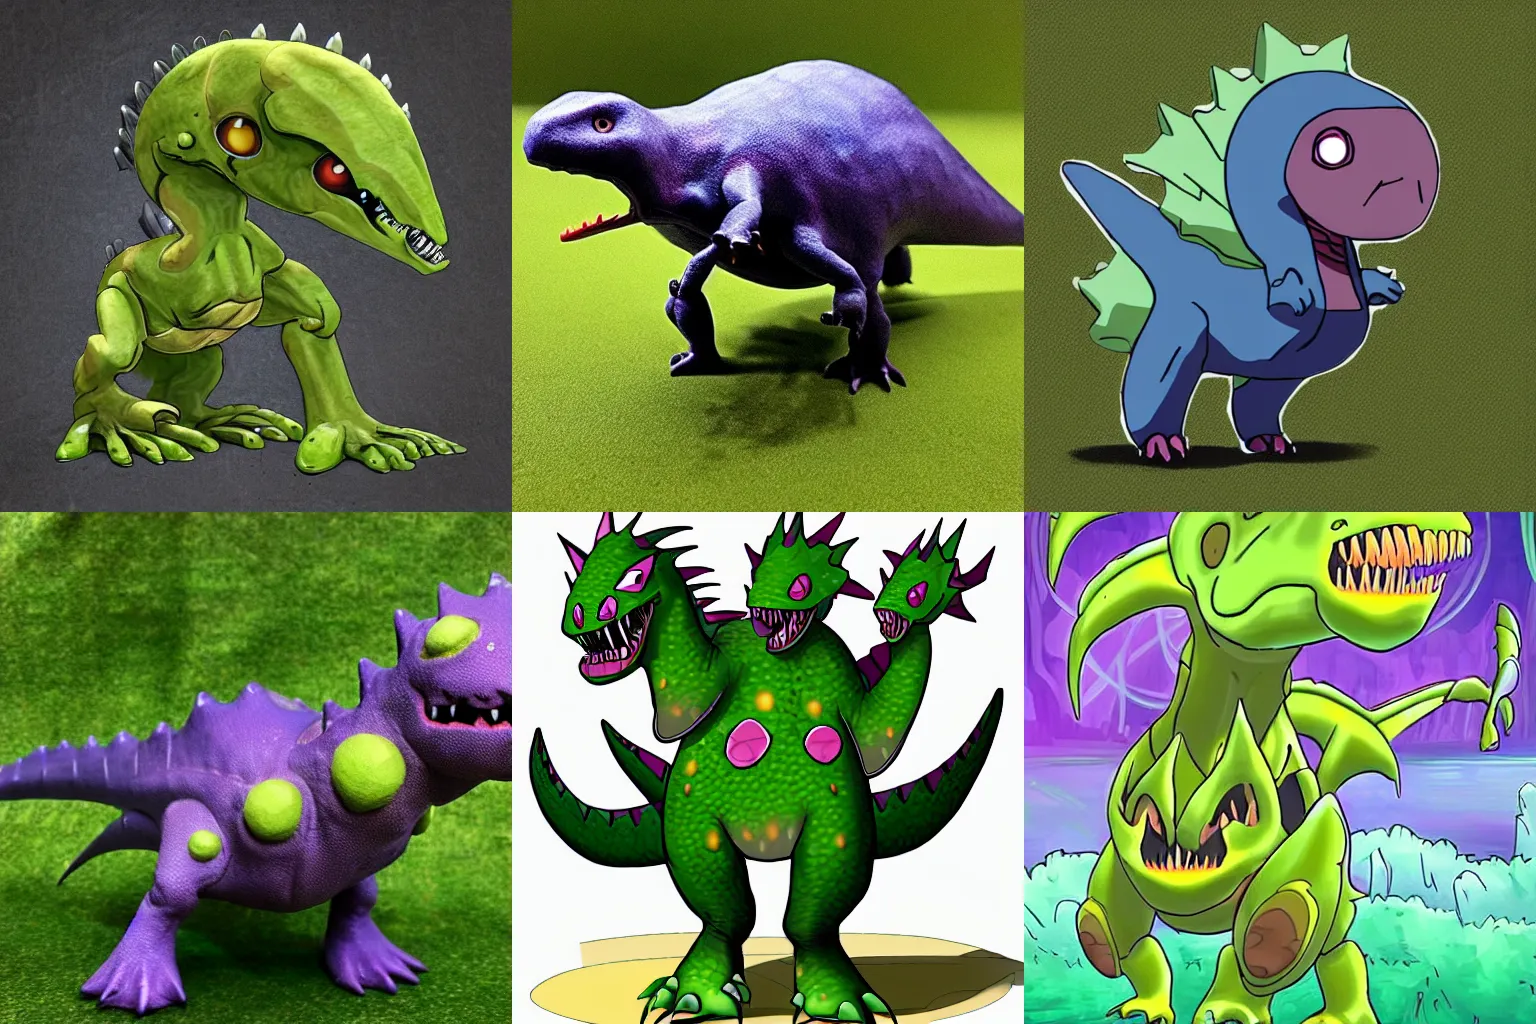 Prompt: dinosaur alien hybrid plant, in the style of pokemon